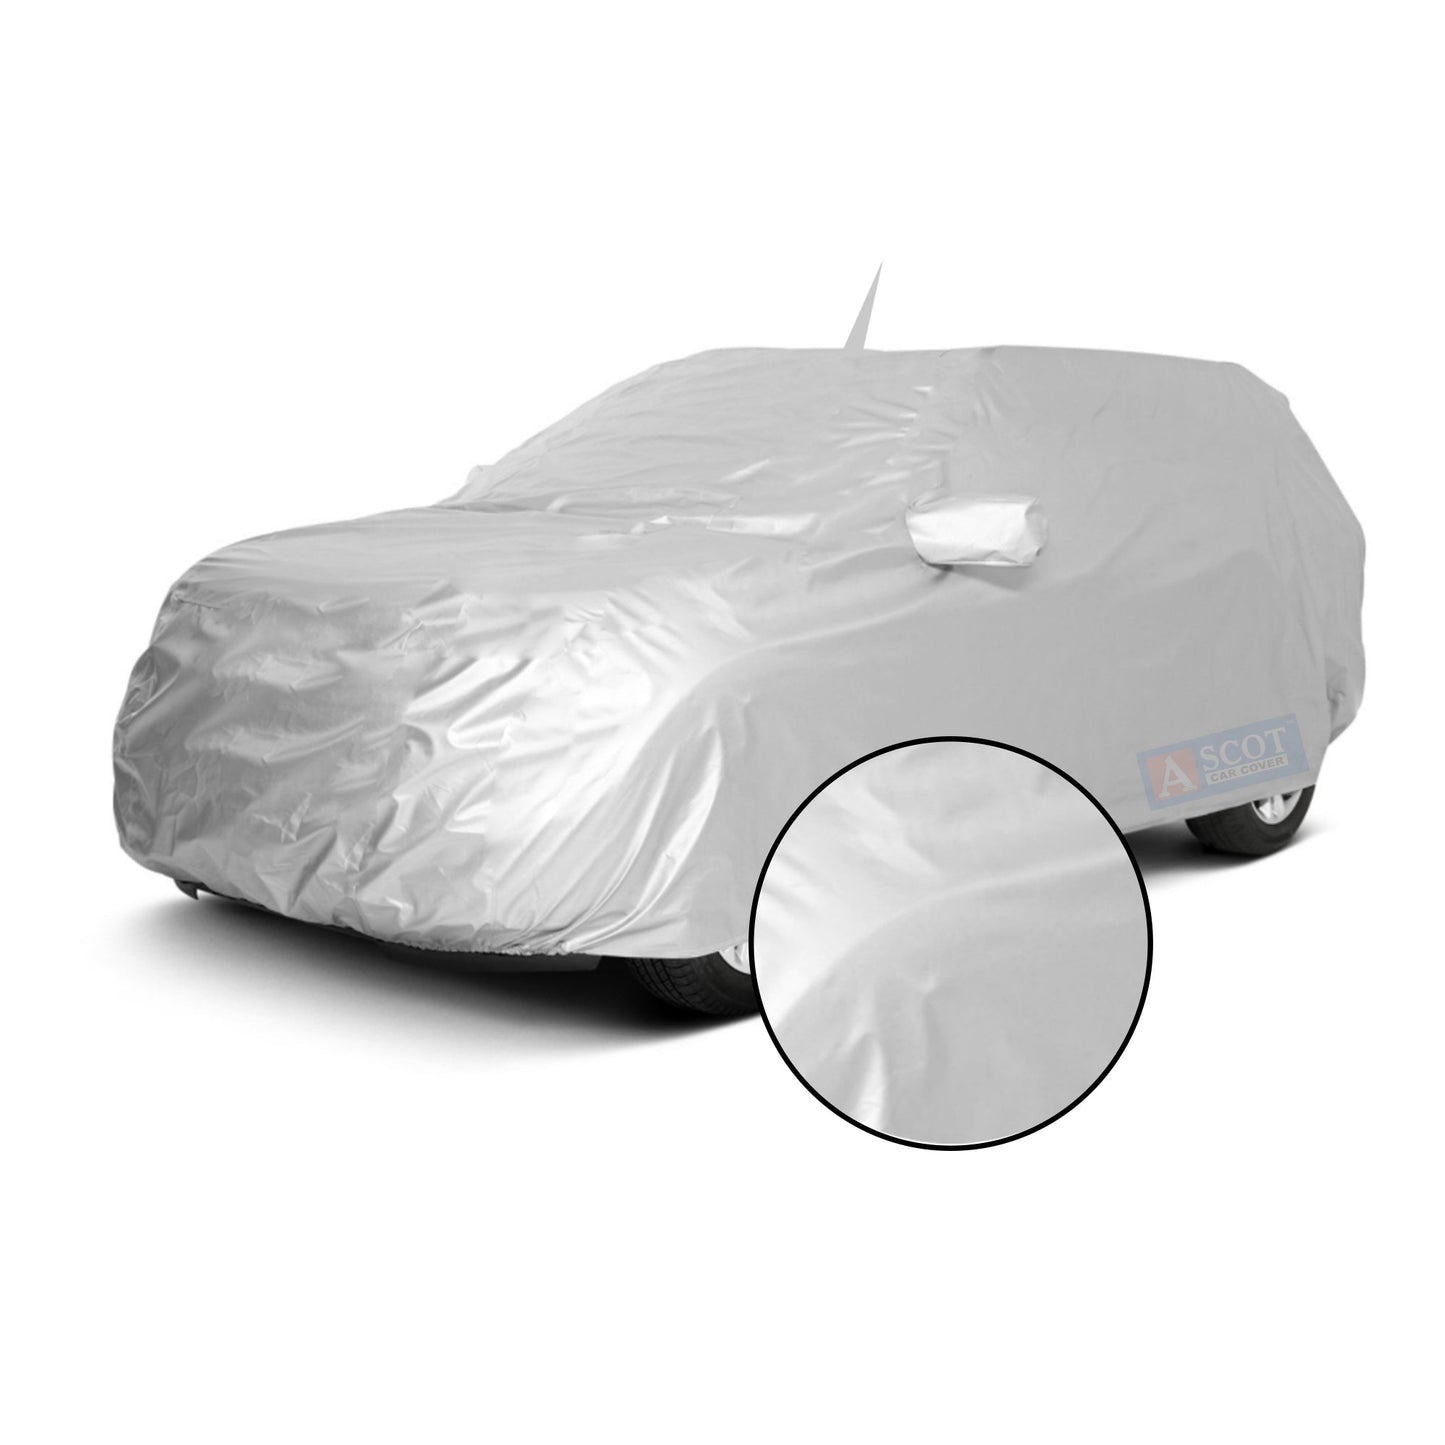 Ascot Mercedes-Benz GLA 2014-2020 Model Car Body Cover Dust Proof, Trippel Stitched